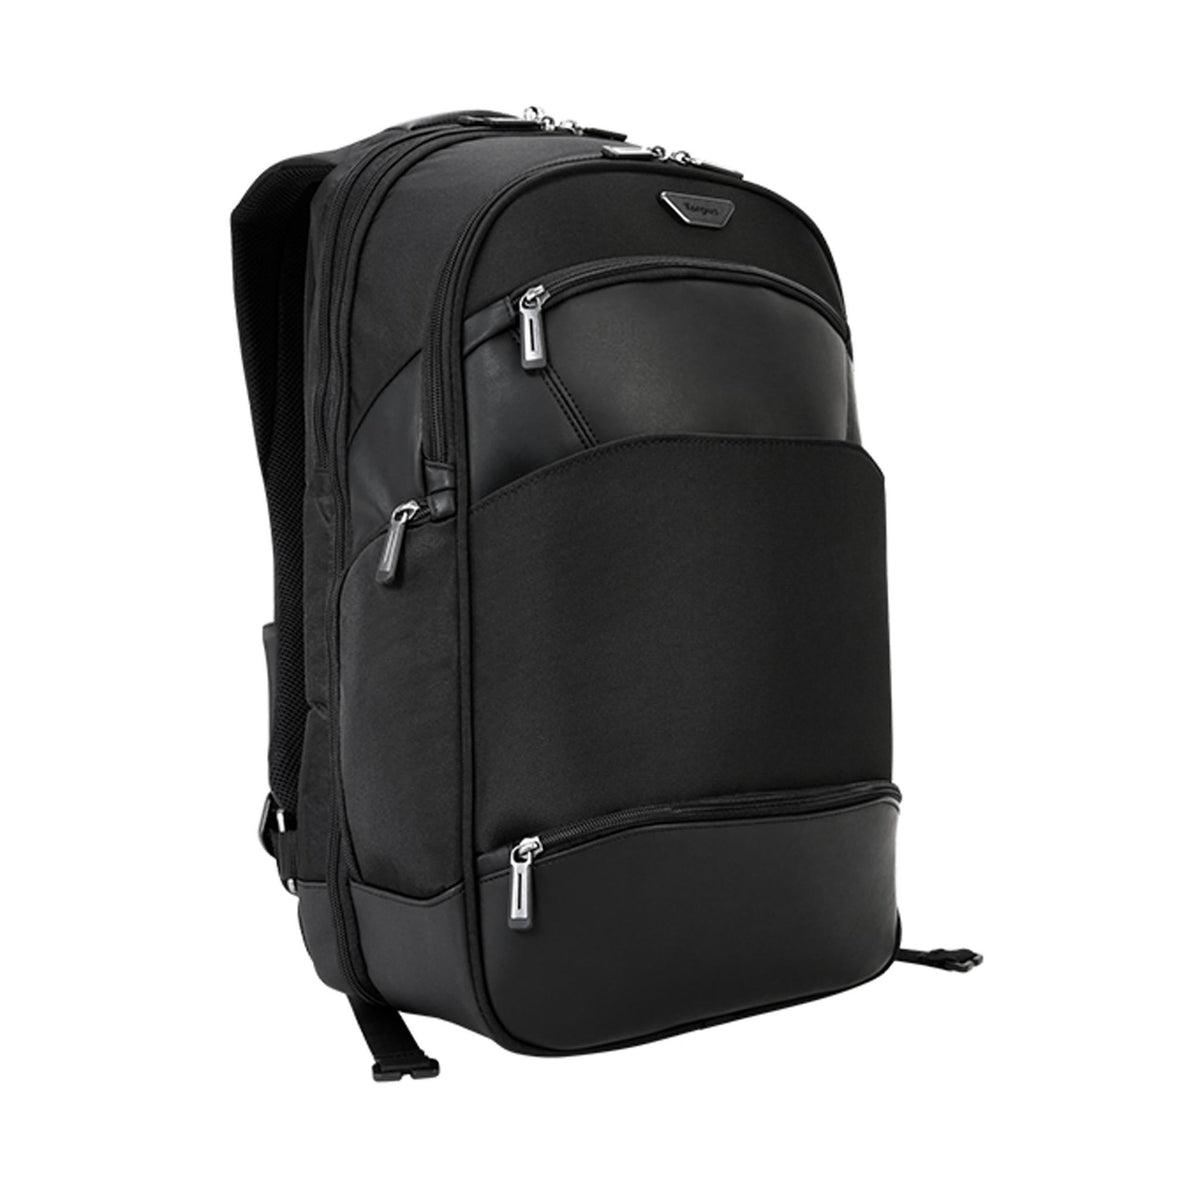 VertX Multicam Black Gamut Checkpoint Backpack - $182.24 after code:  10FORUGT ($4.99 S/H over $125) | gun.deals